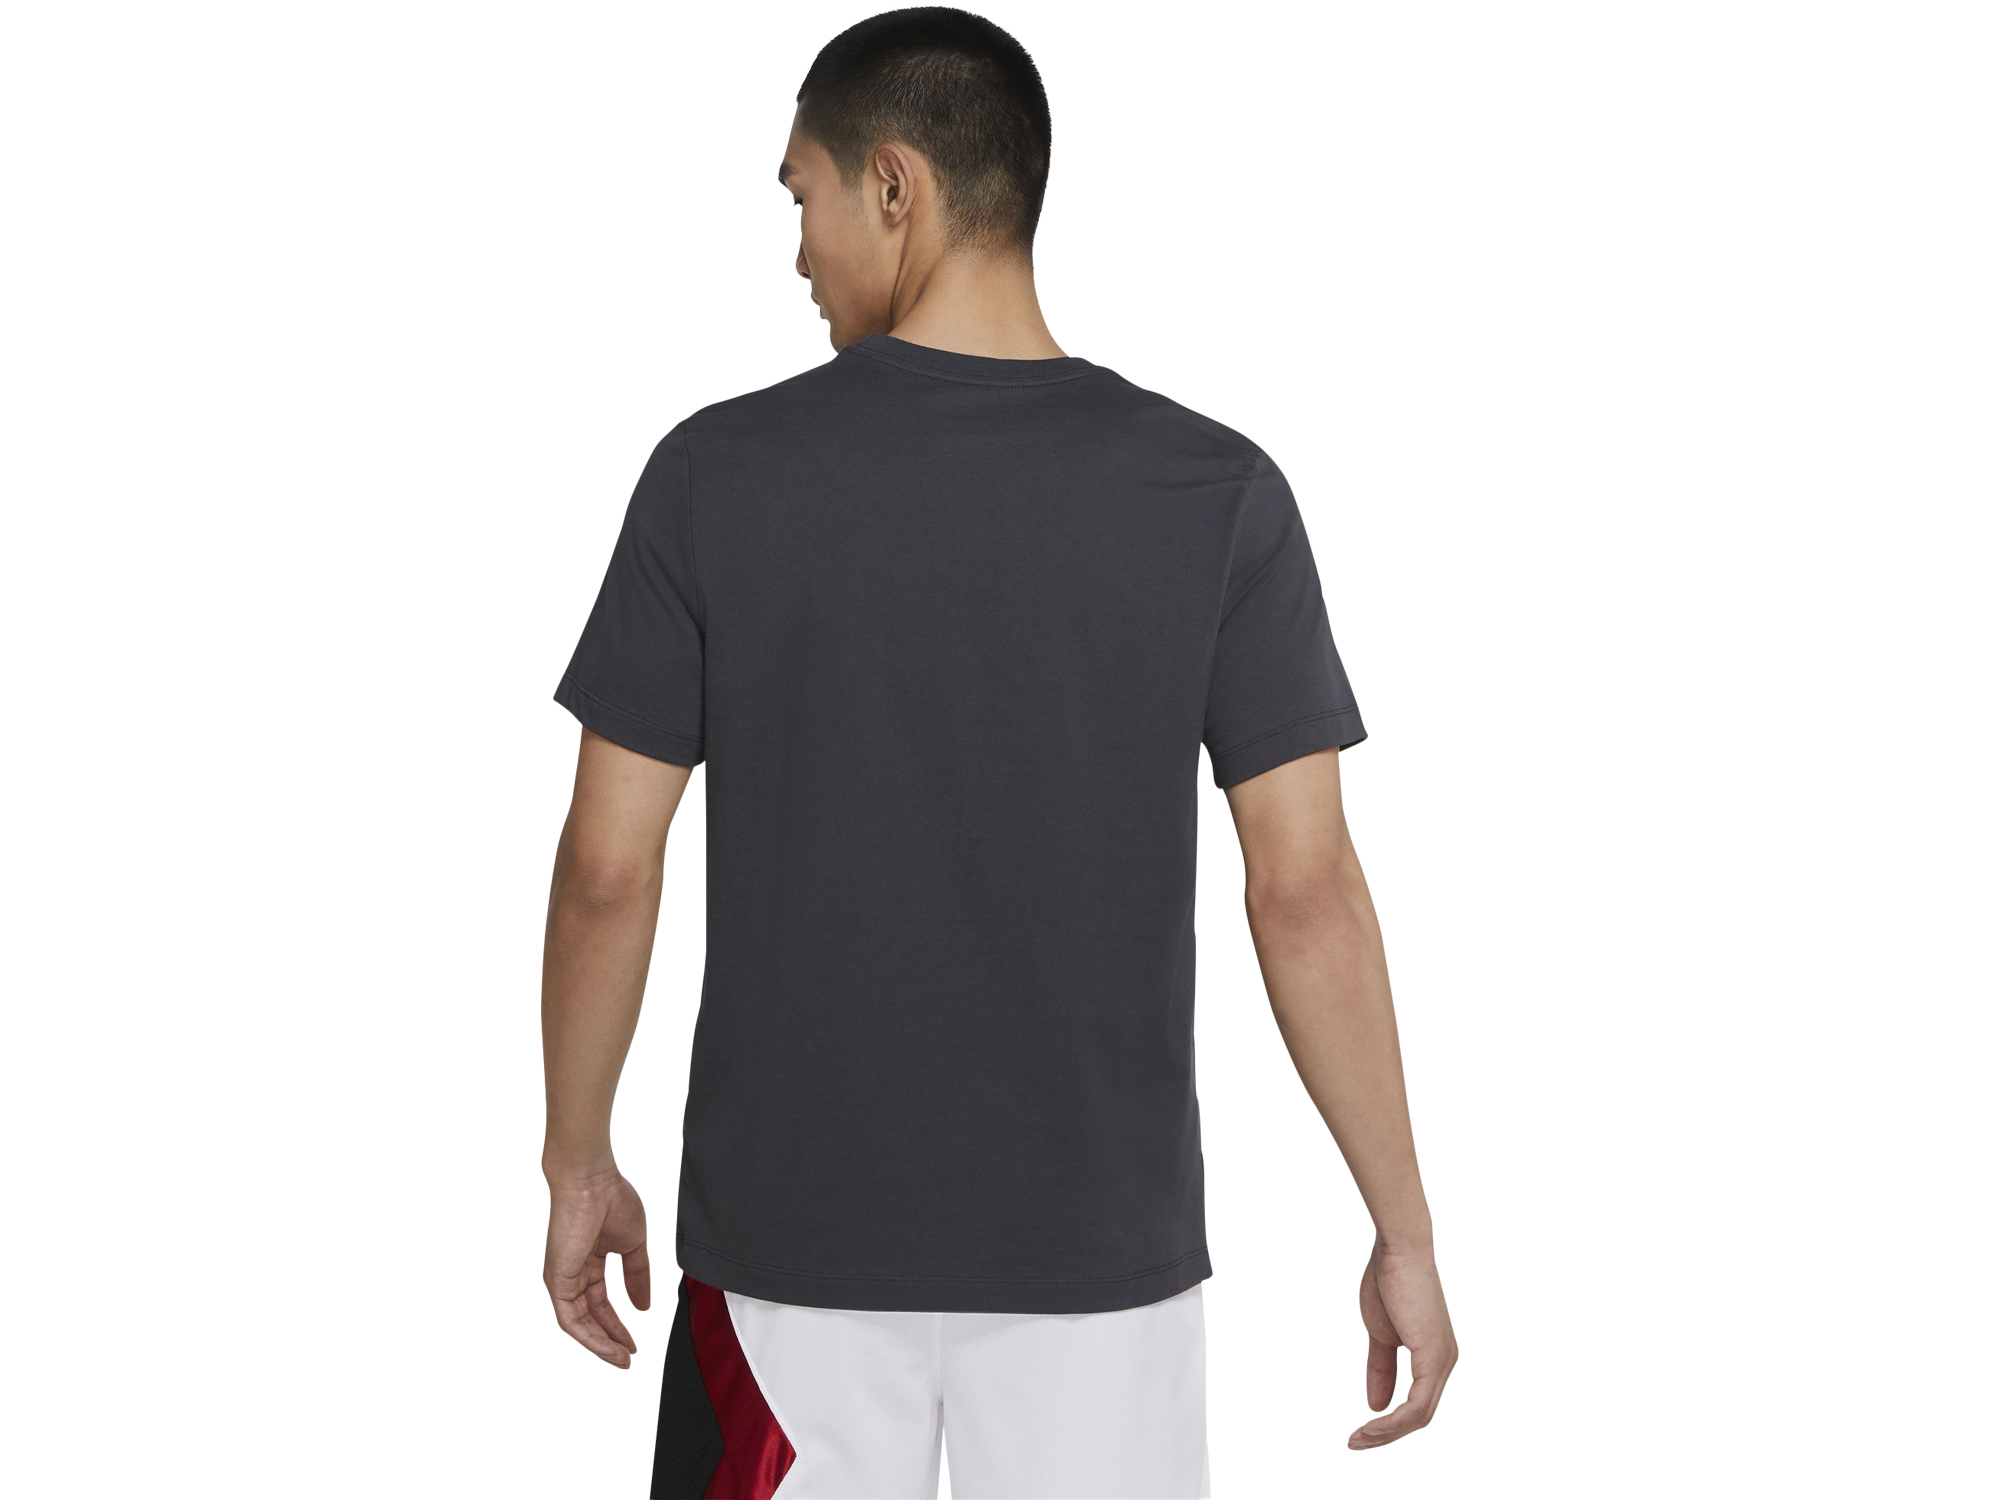 Jordan AJ5 '85 Graphic T-Shirt